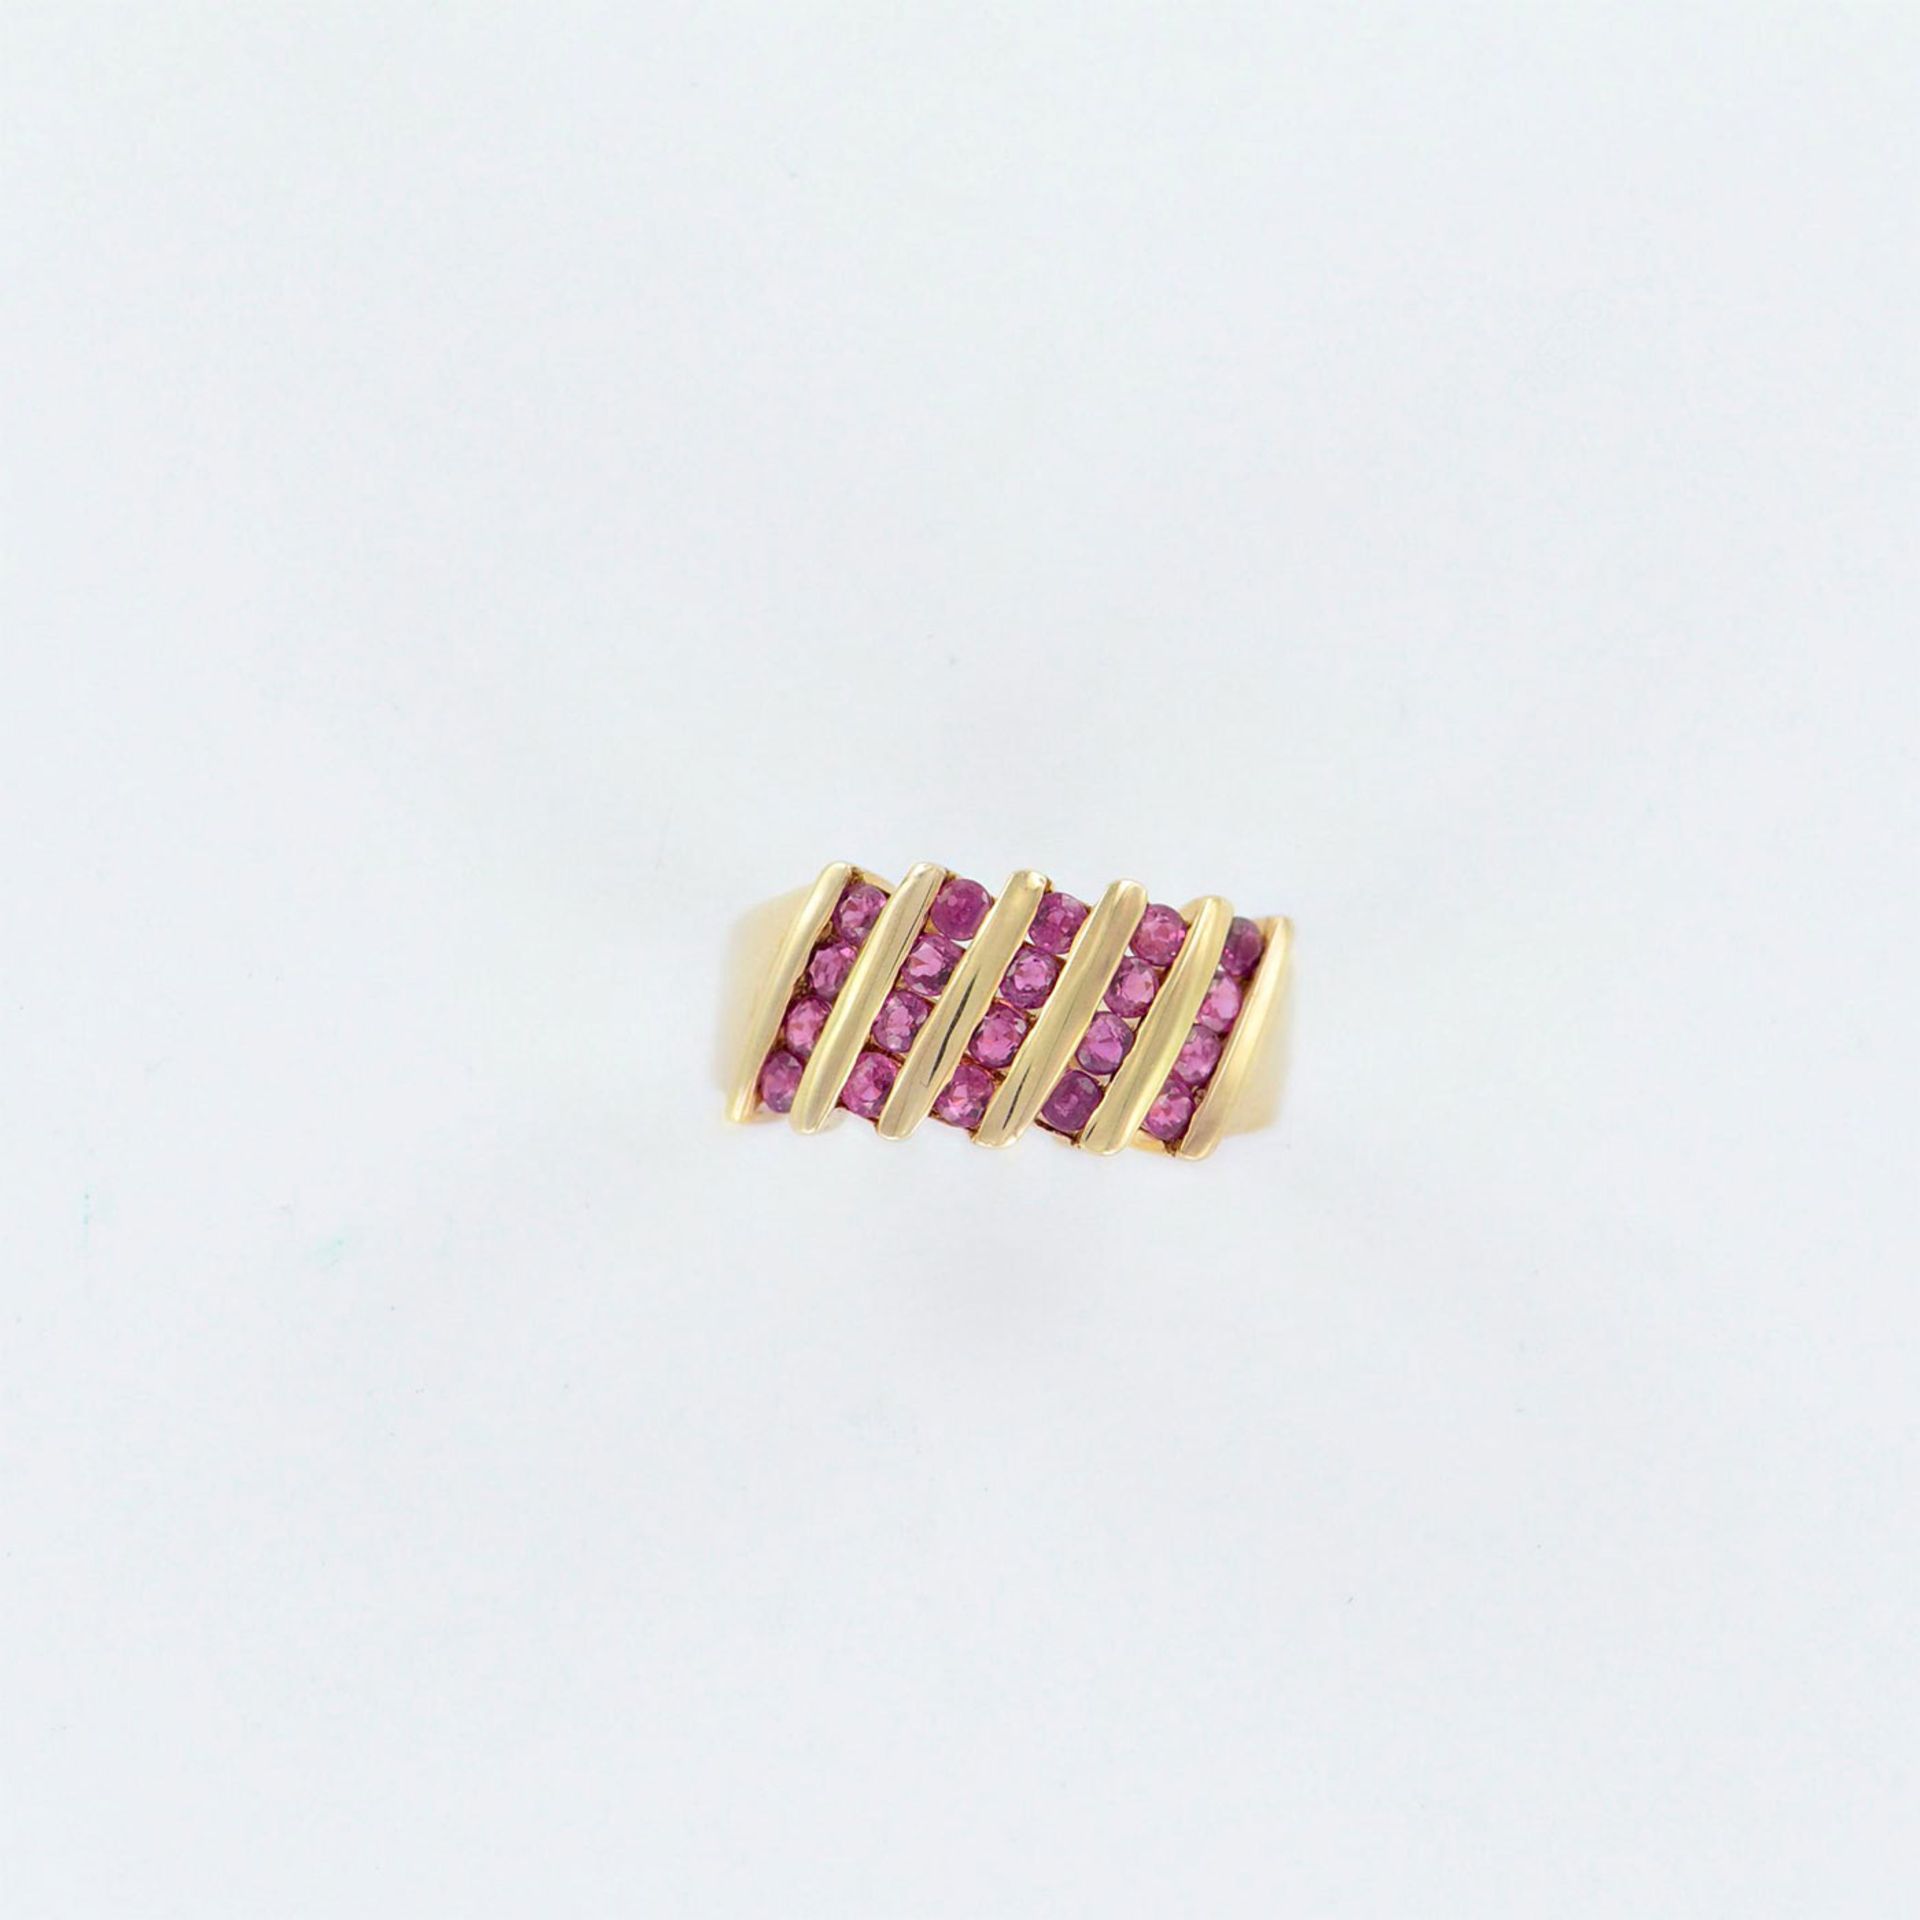 Samuel Aaron, Inc. 10k Gold with Pink Gemstones Ring - Image 5 of 5